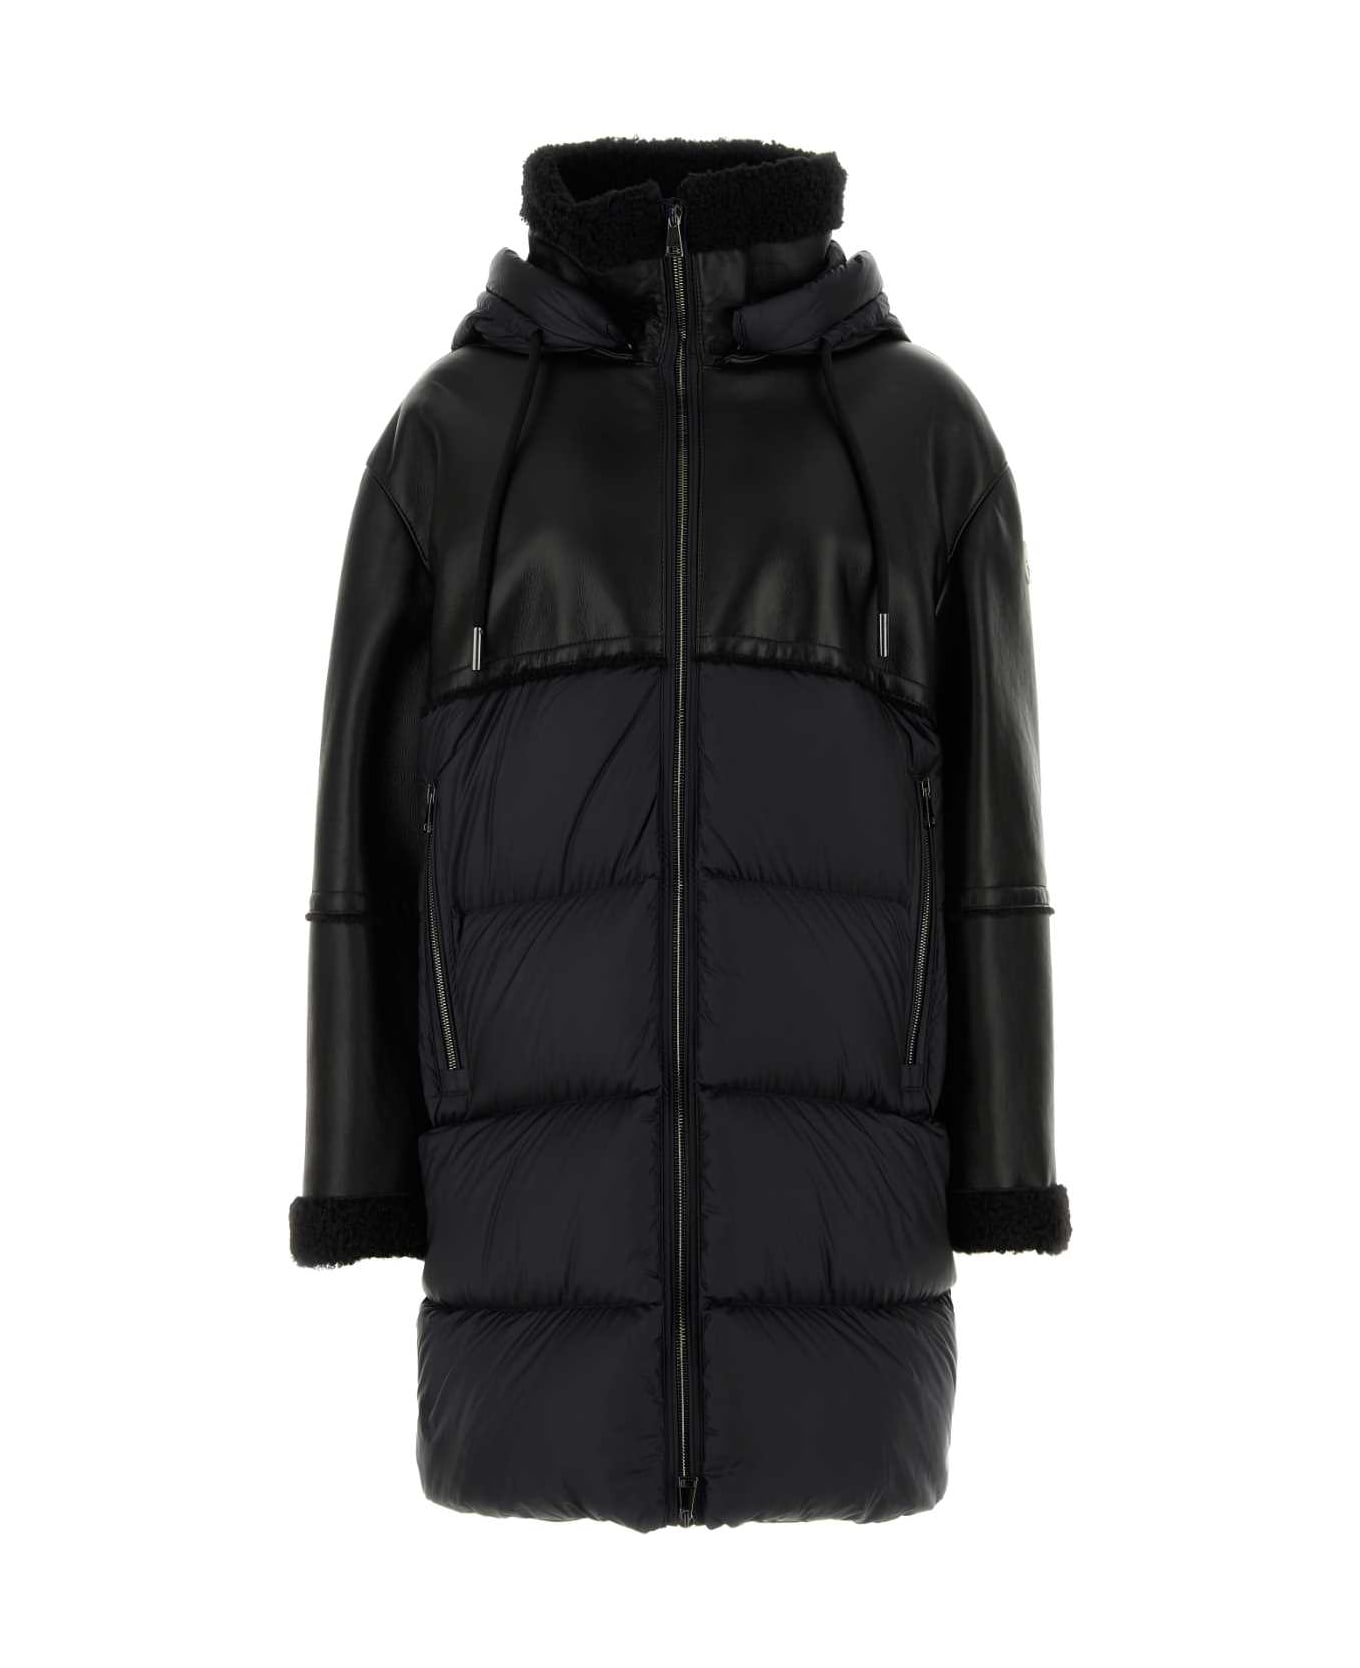 Moncler Black Leather And Nylon Tana Down Jacket - 999